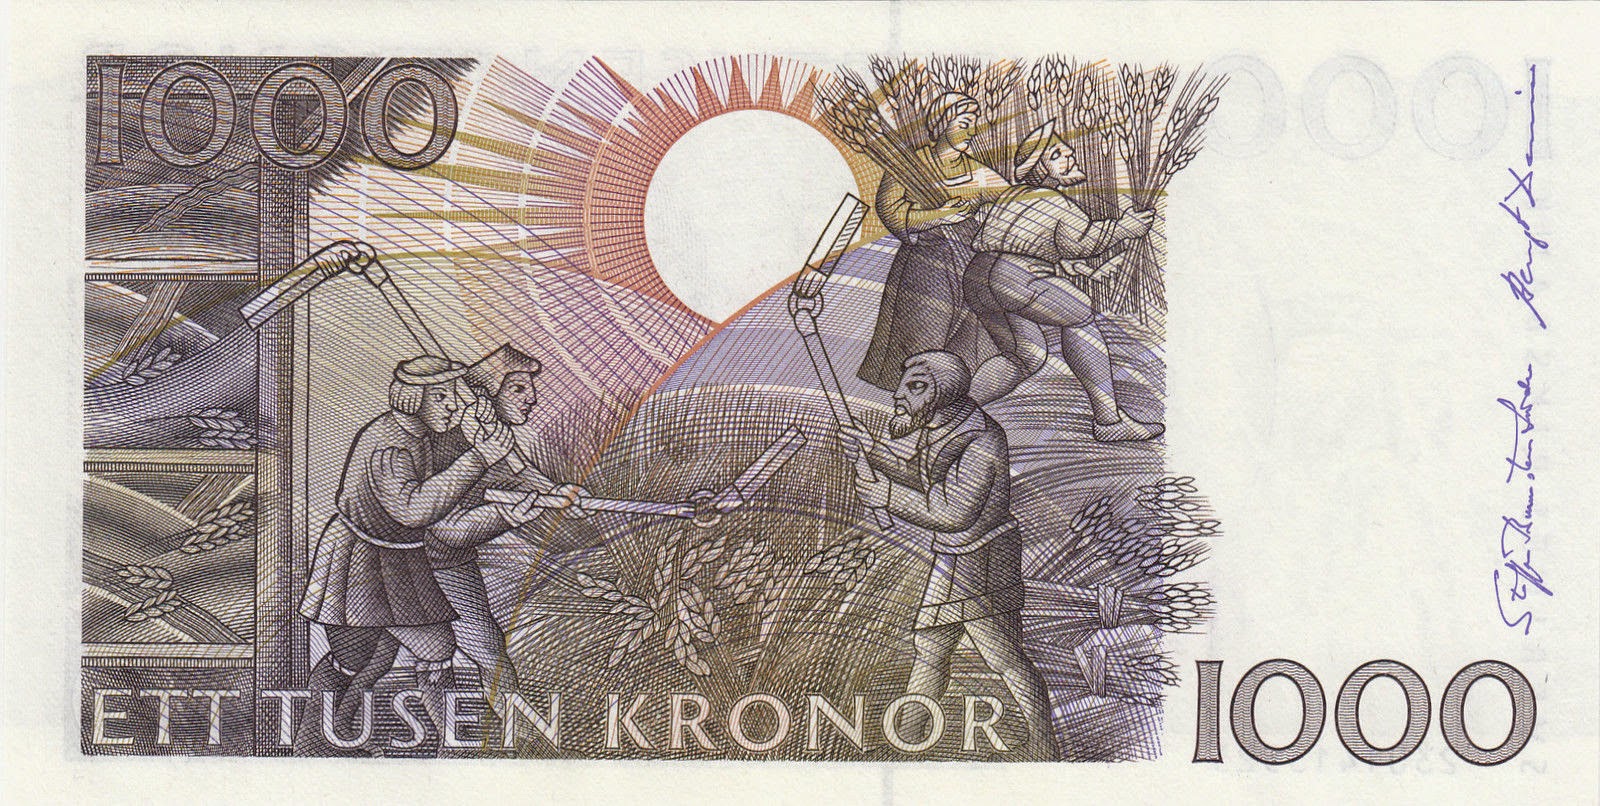 Sweden Currency 1000 Swedish Krona banknote